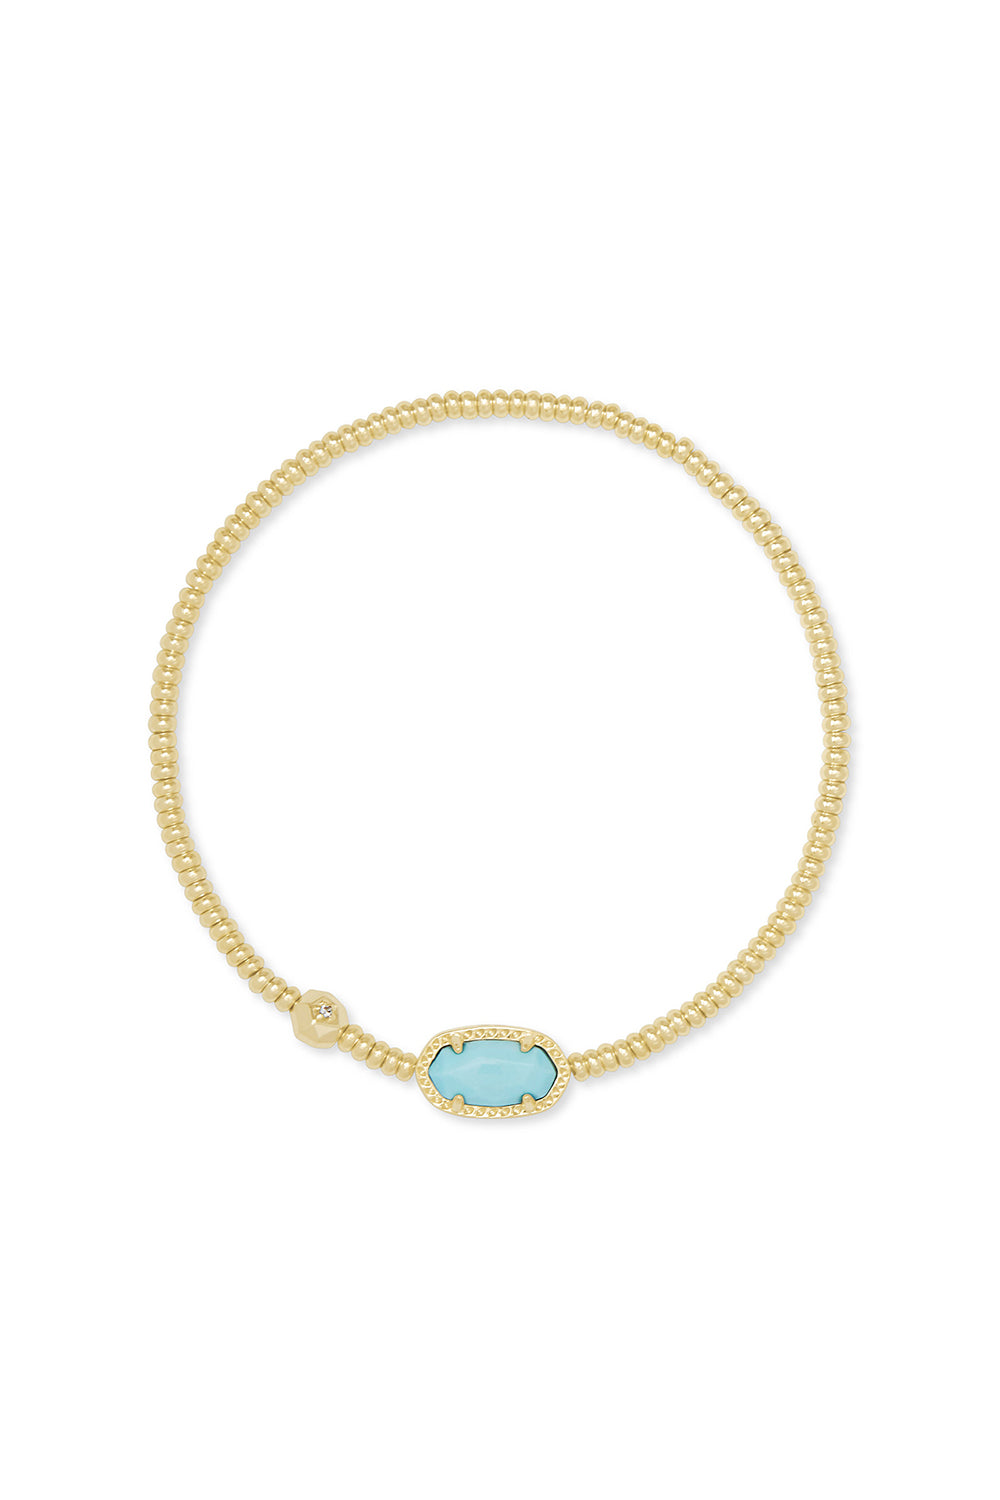 Kendra Scott: Grayson Gold Stretch Bracelet - Light Blue Magnesite | Makk Fashions